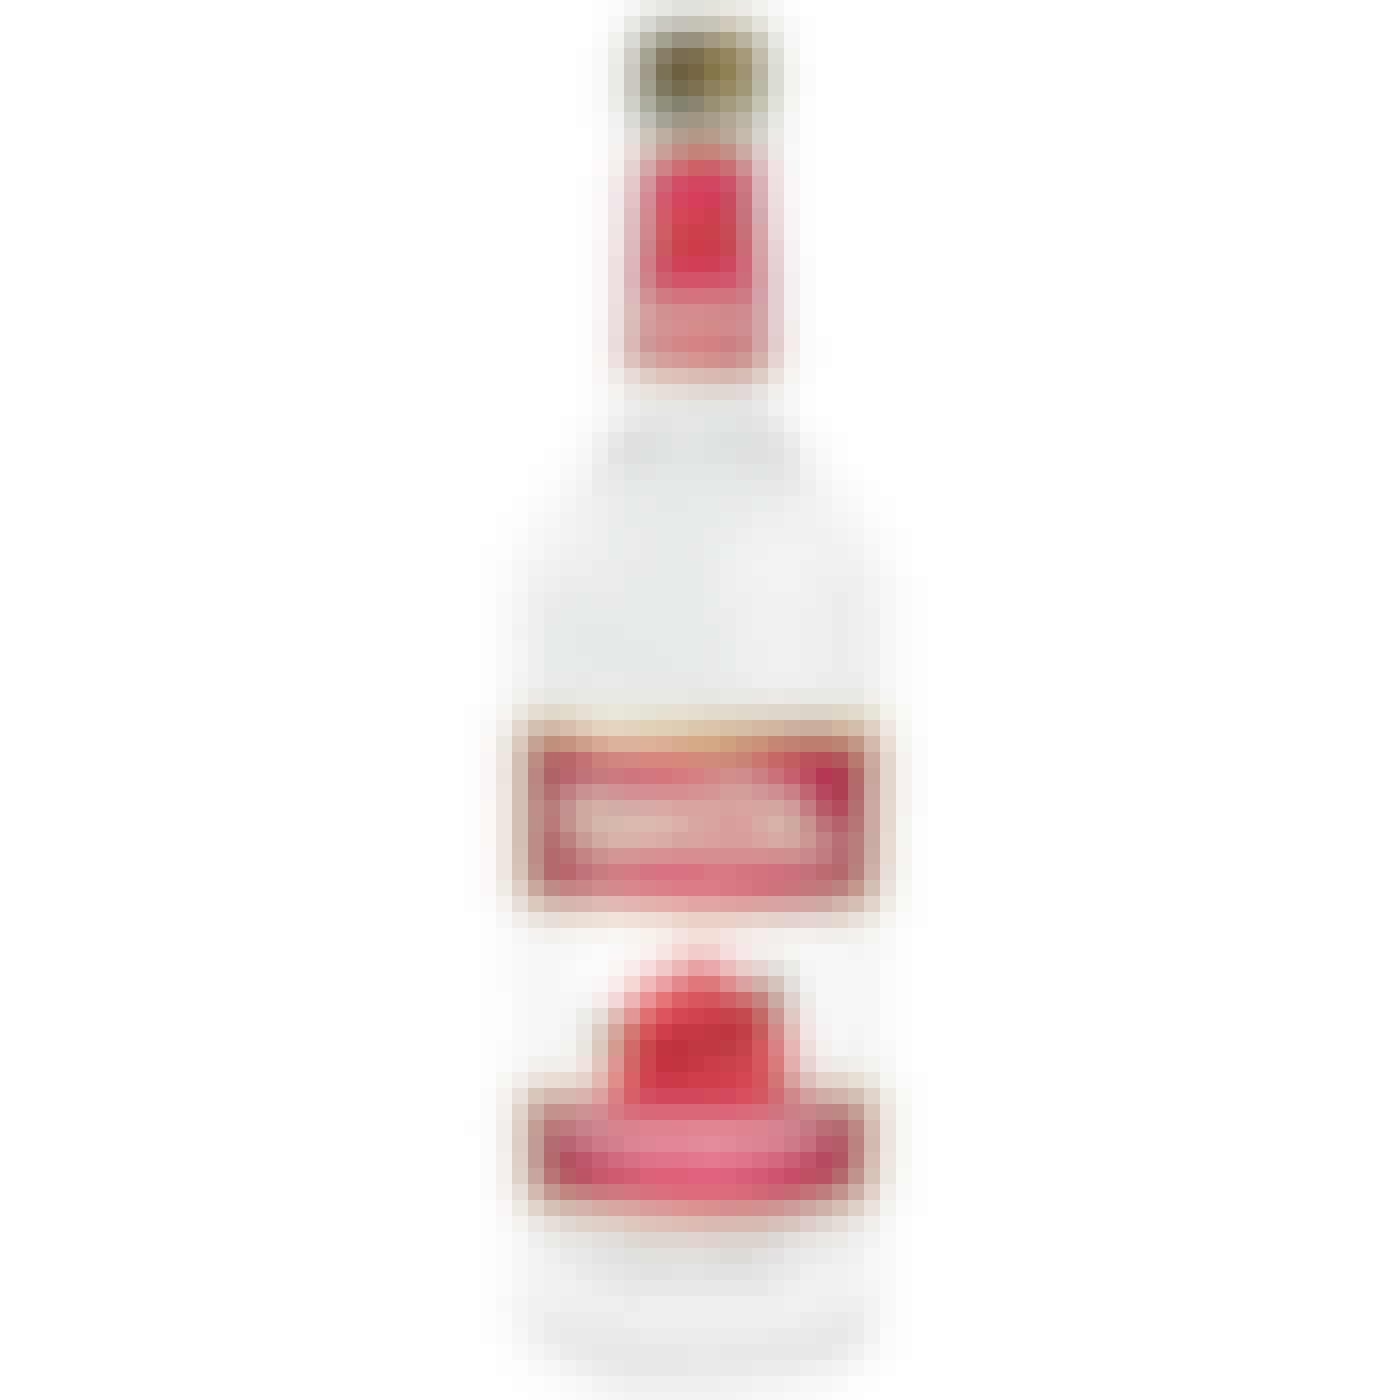 Skol Raspberry Vodka 1.75L